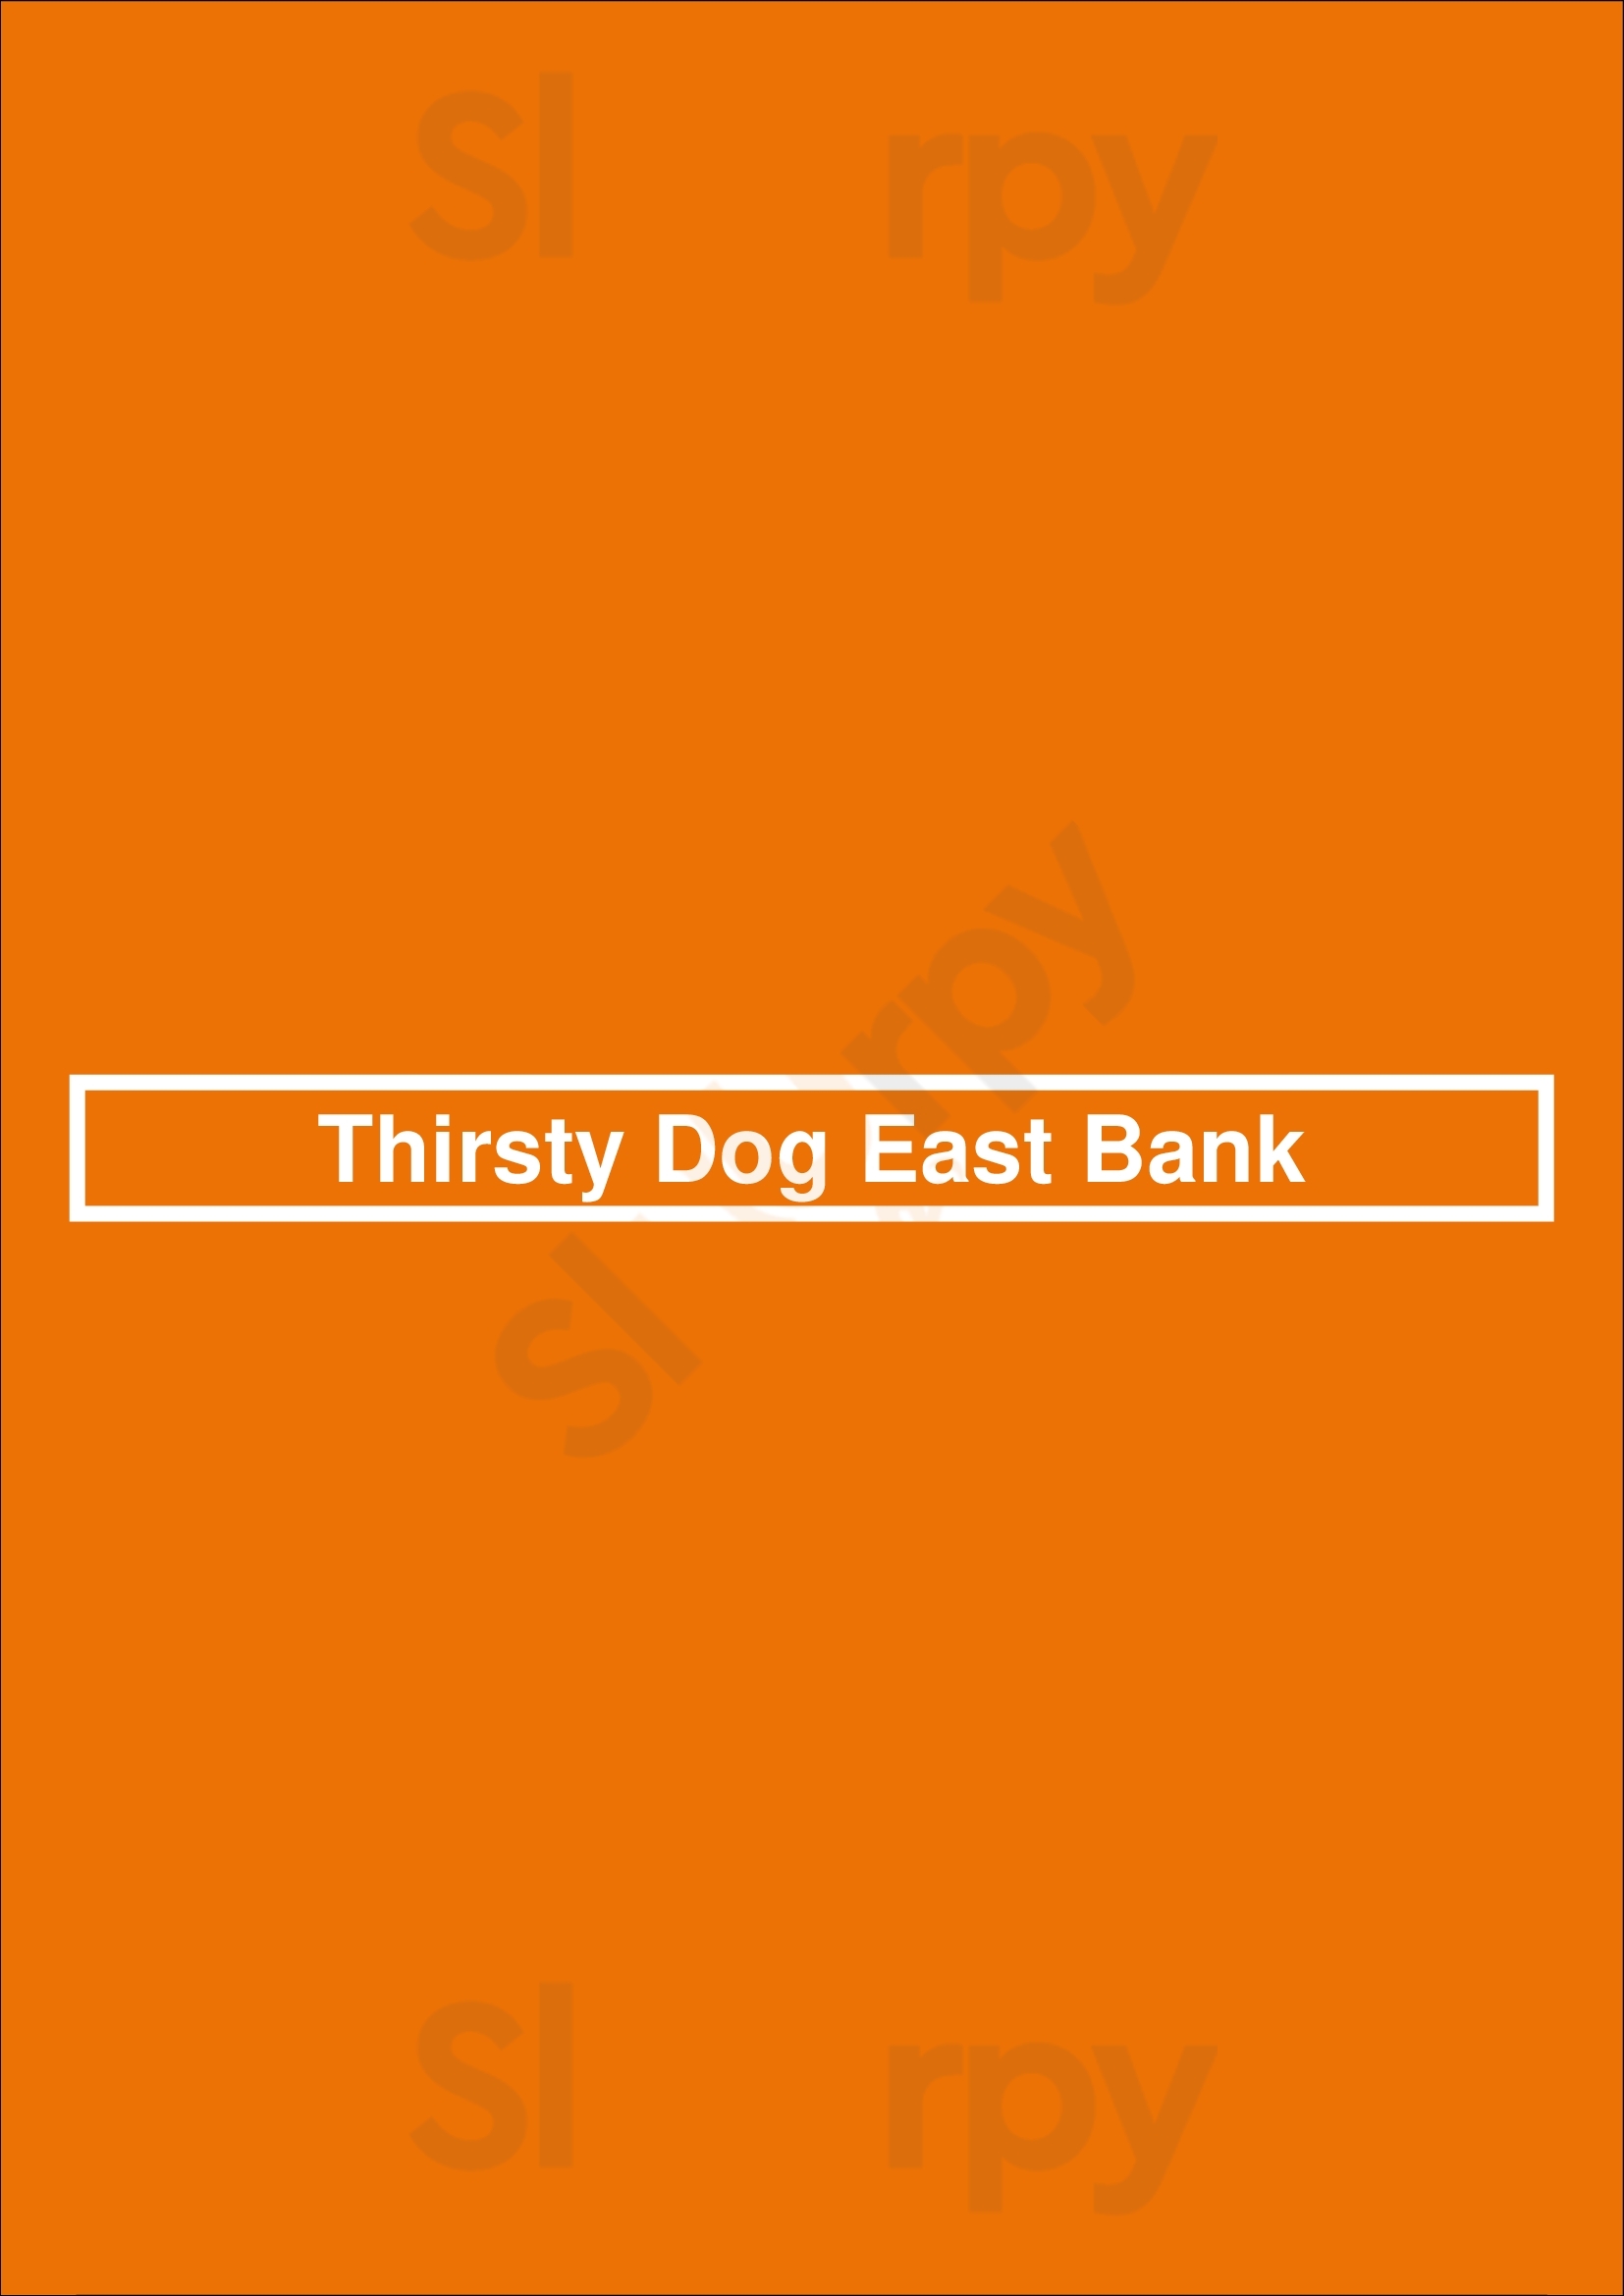 Thirsty Dog East Bank Cleveland Menu - 1